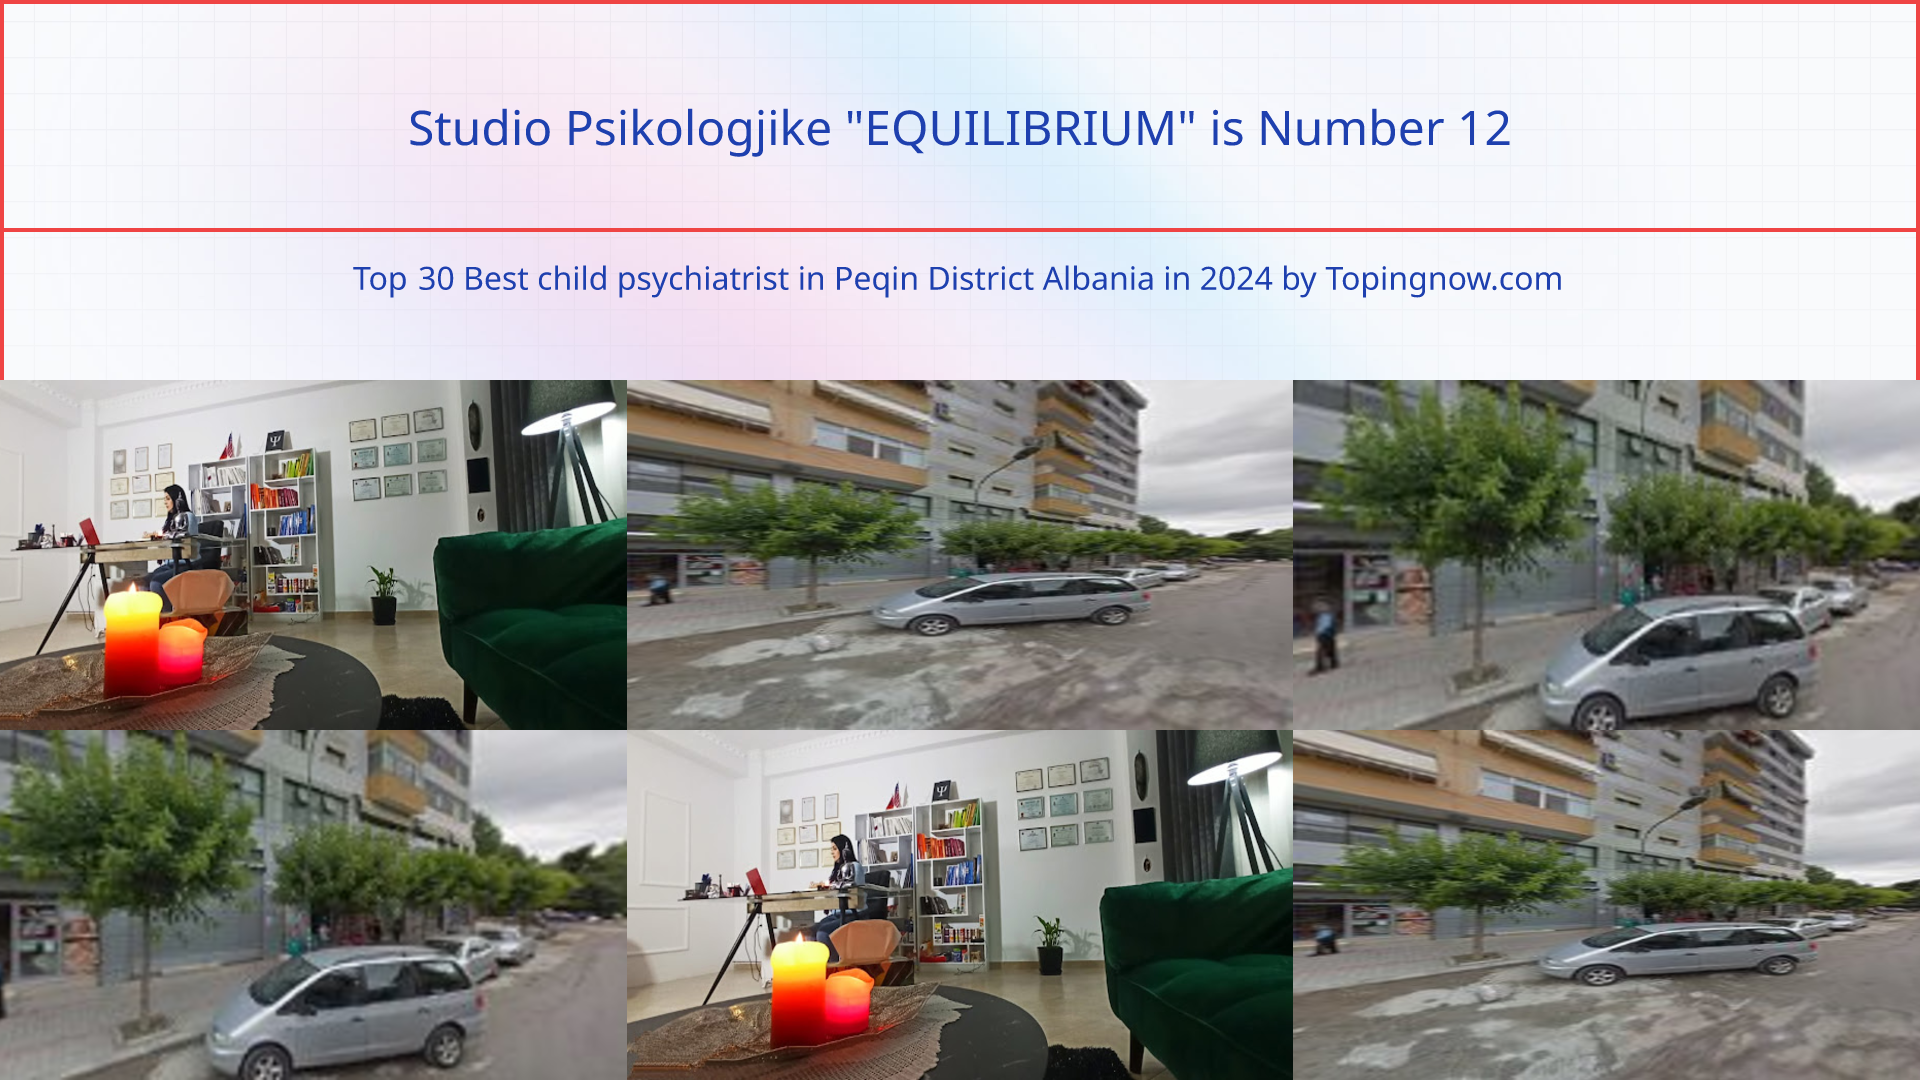 Studio Psikologjike "EQUILIBRIUM": Top 30 Best child psychiatrist in Peqin District Albania in 2024